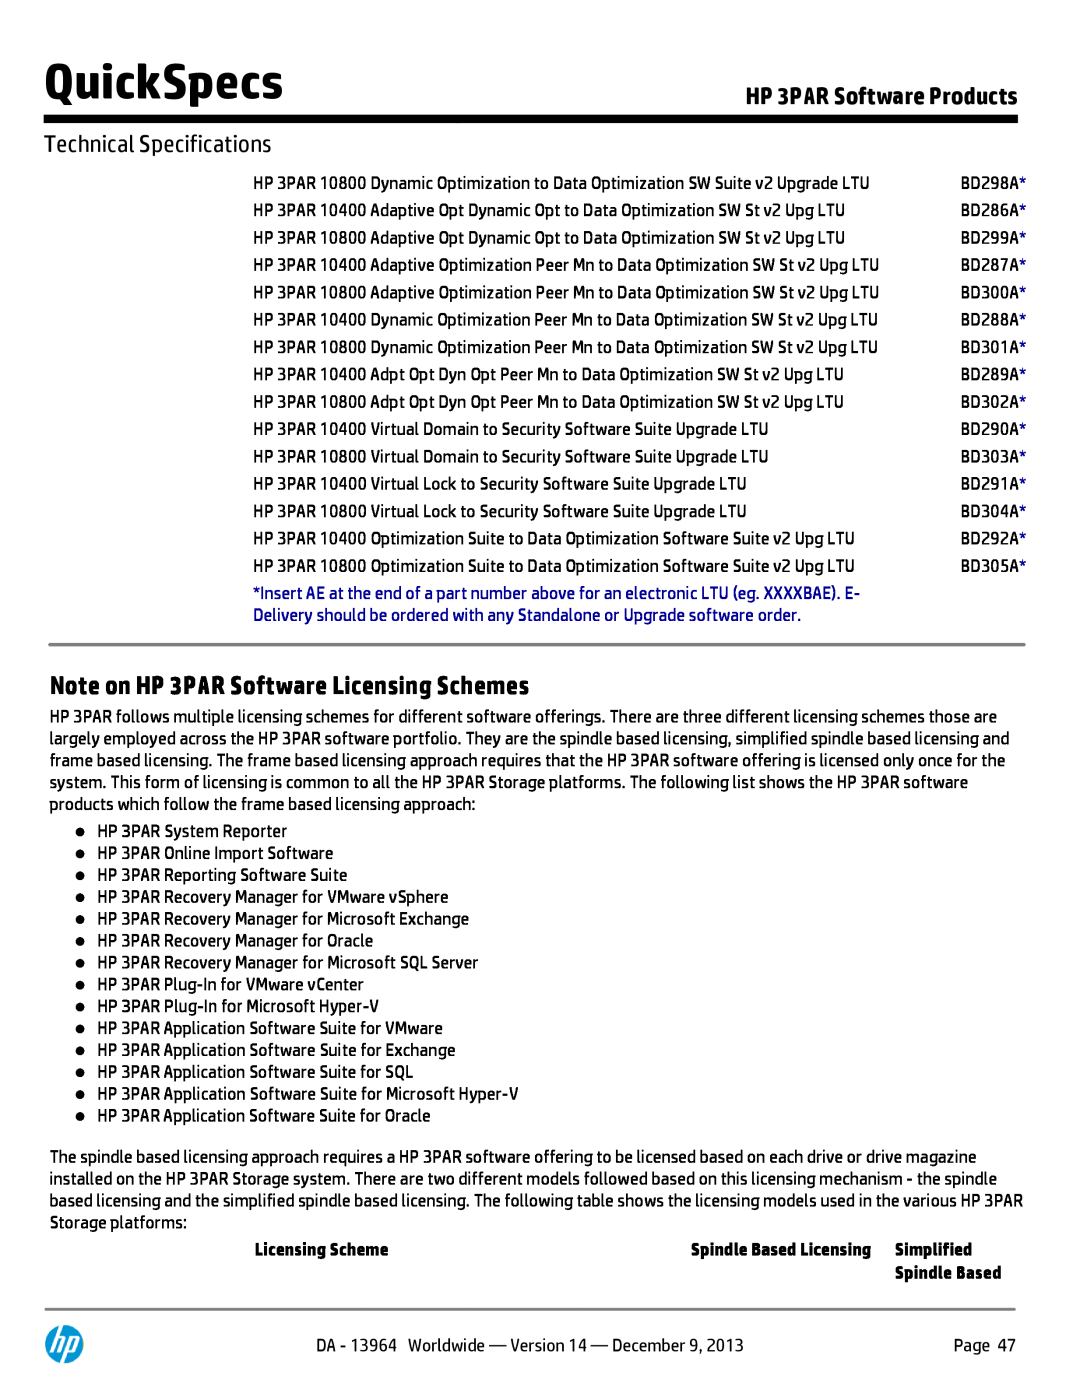 HP 7200 BC767A Note on HP 3PAR Software Licensing Schemes, Simplified, DA - 13964 Worldwide - Version 14 - December 9 